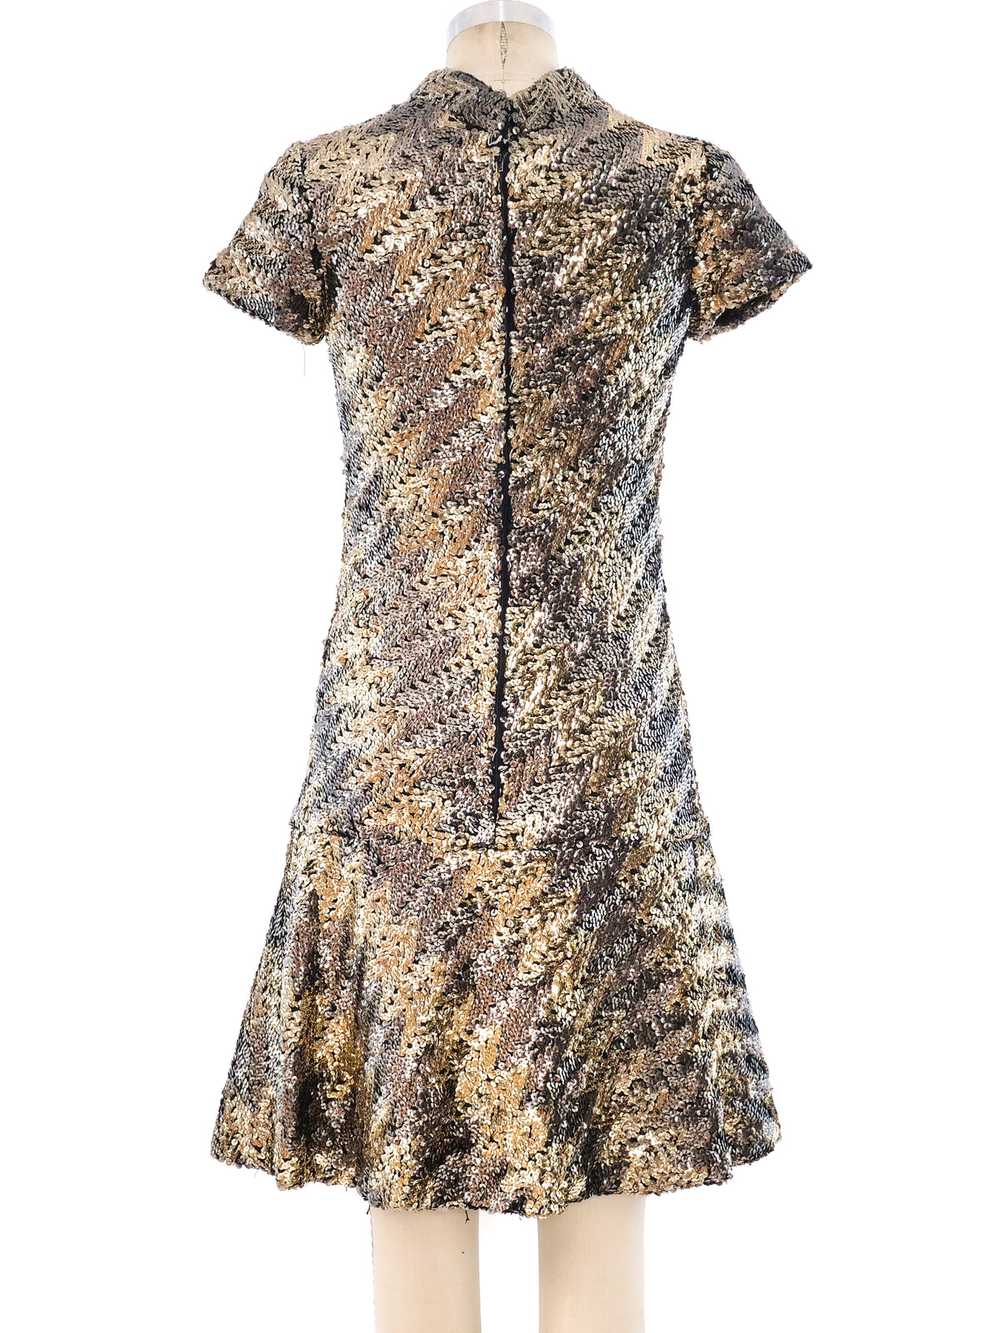 Chevron Sequin Embellished Dress - image 4